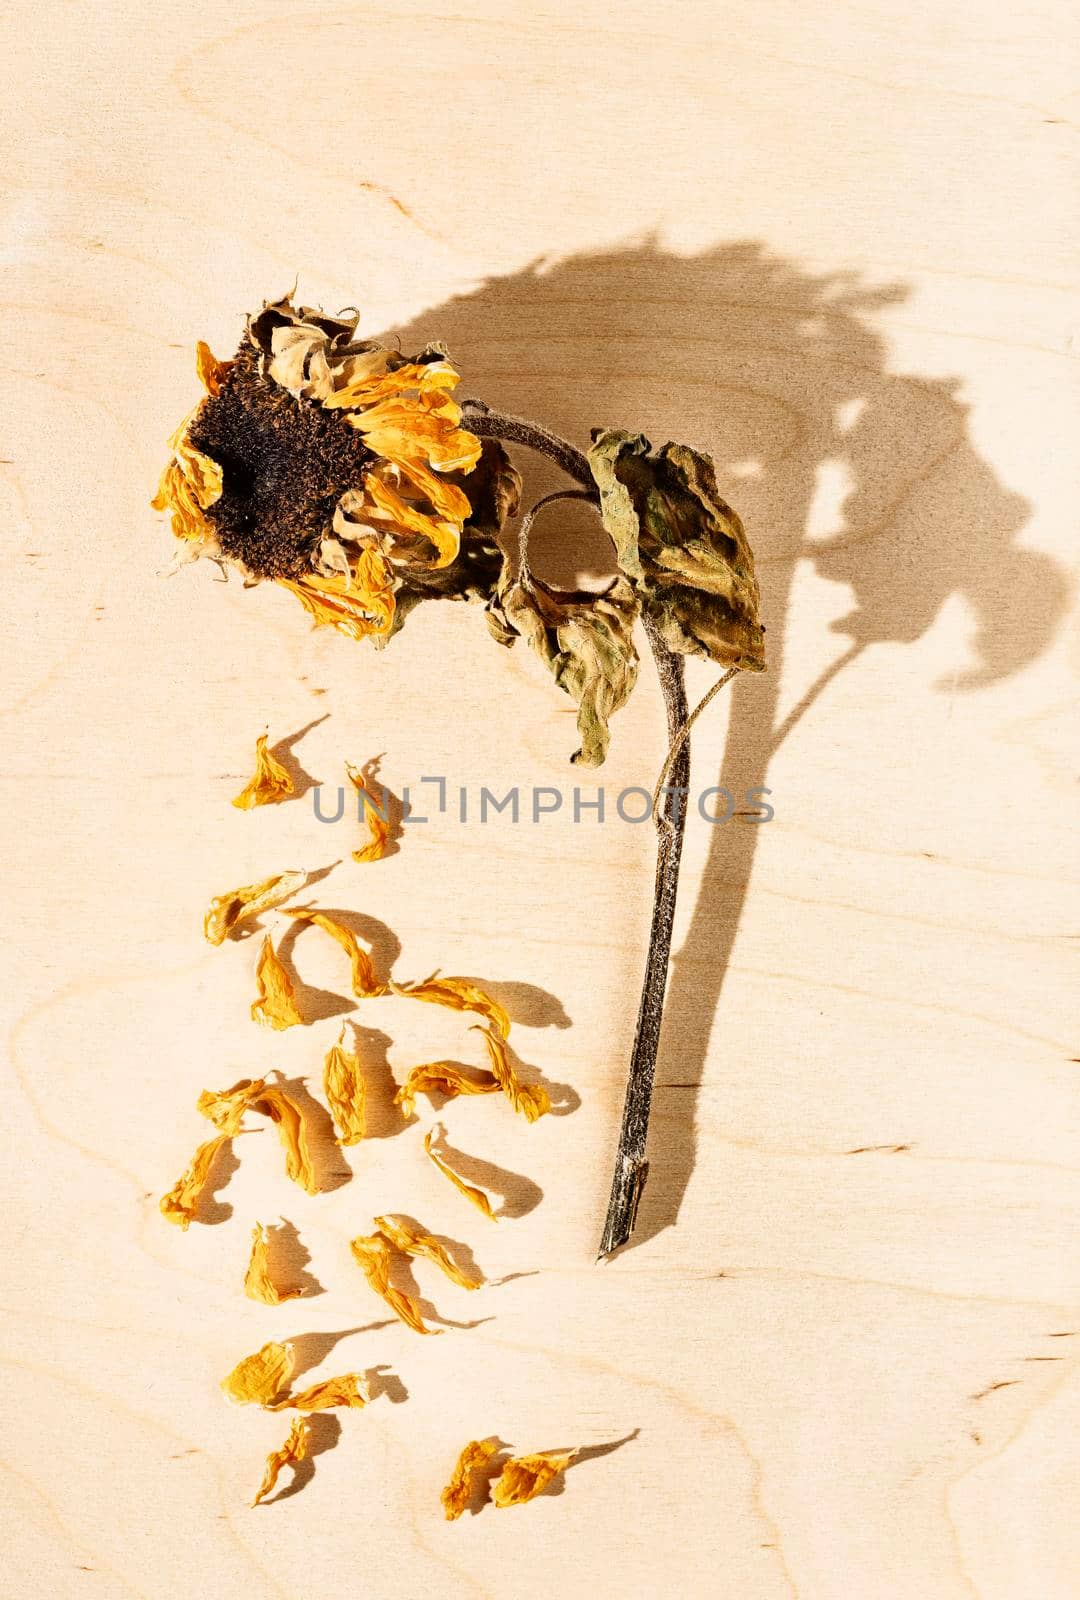 Dried sunflower on wooden background  , fallen yellow petals around ,beautiful flower shadow